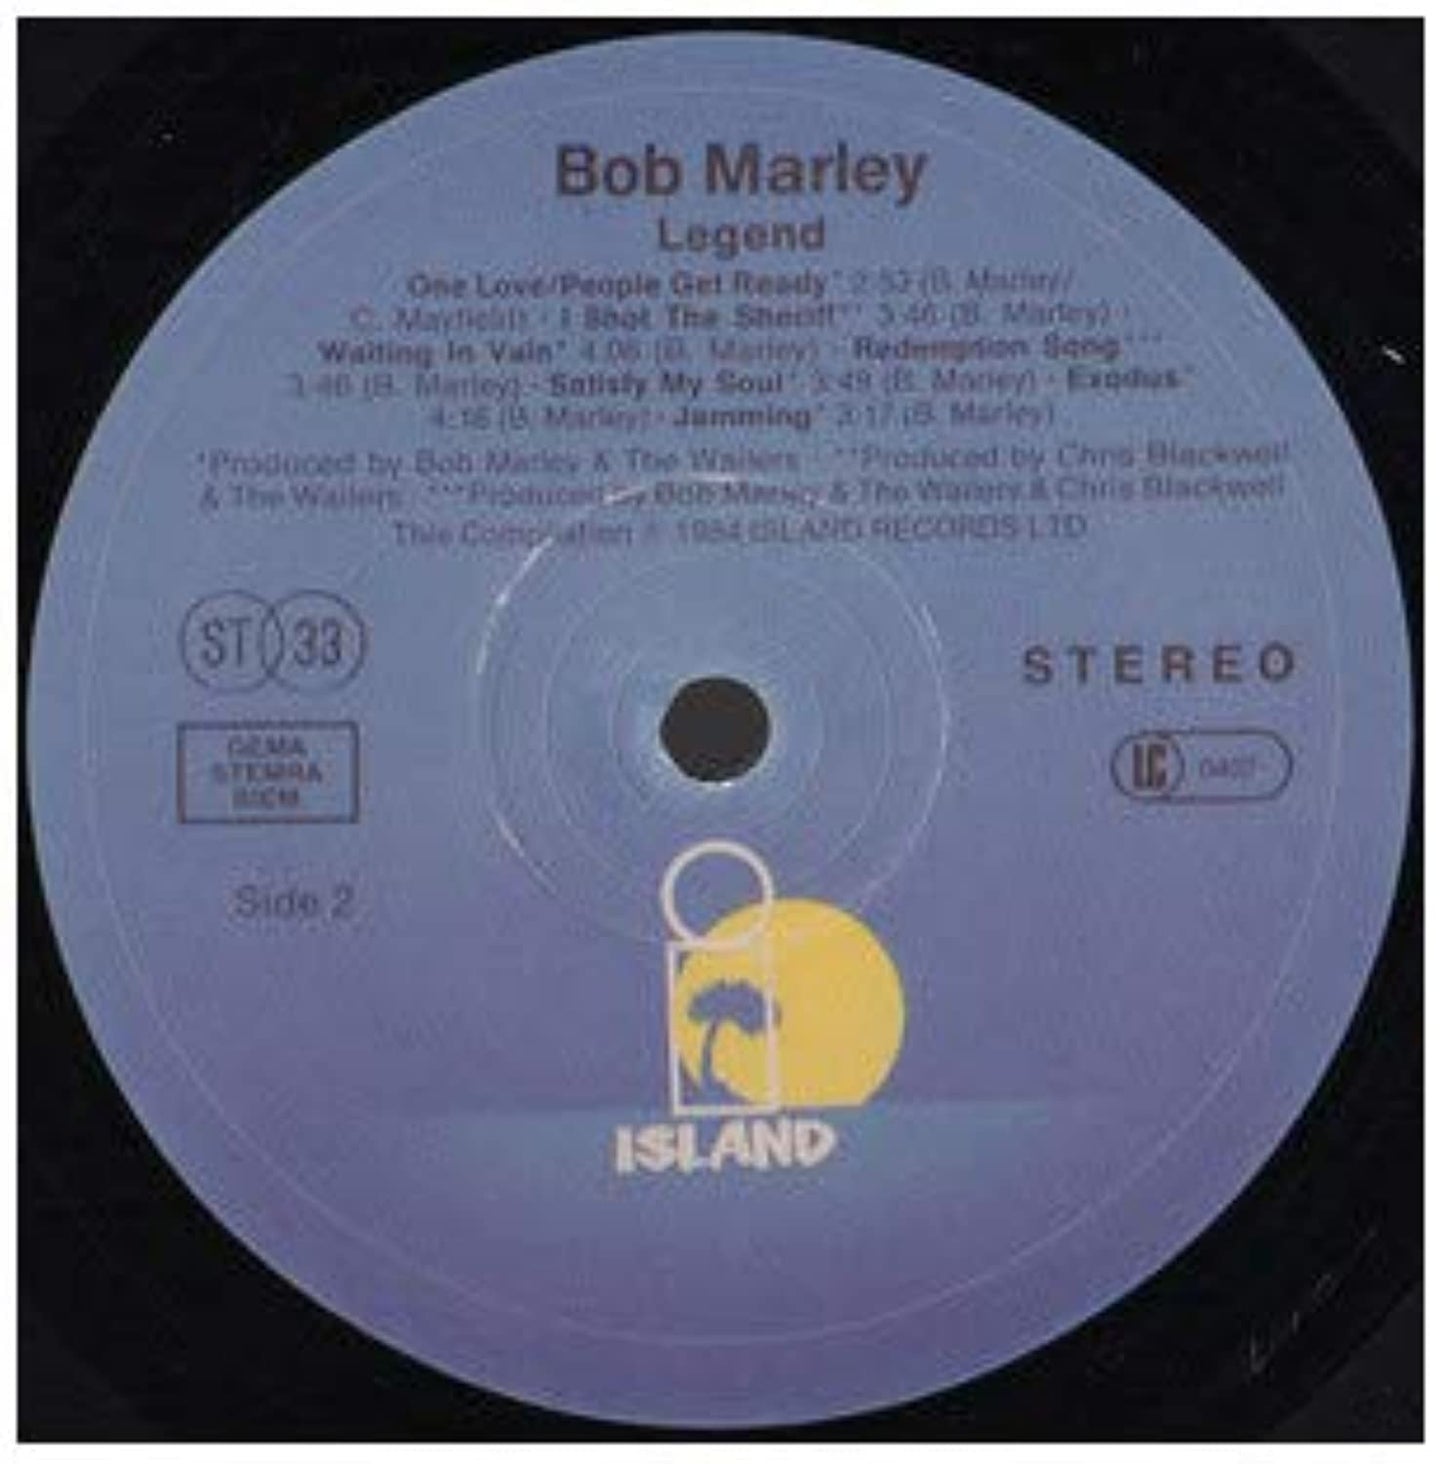 Legend - Bob Marley - Vinyl